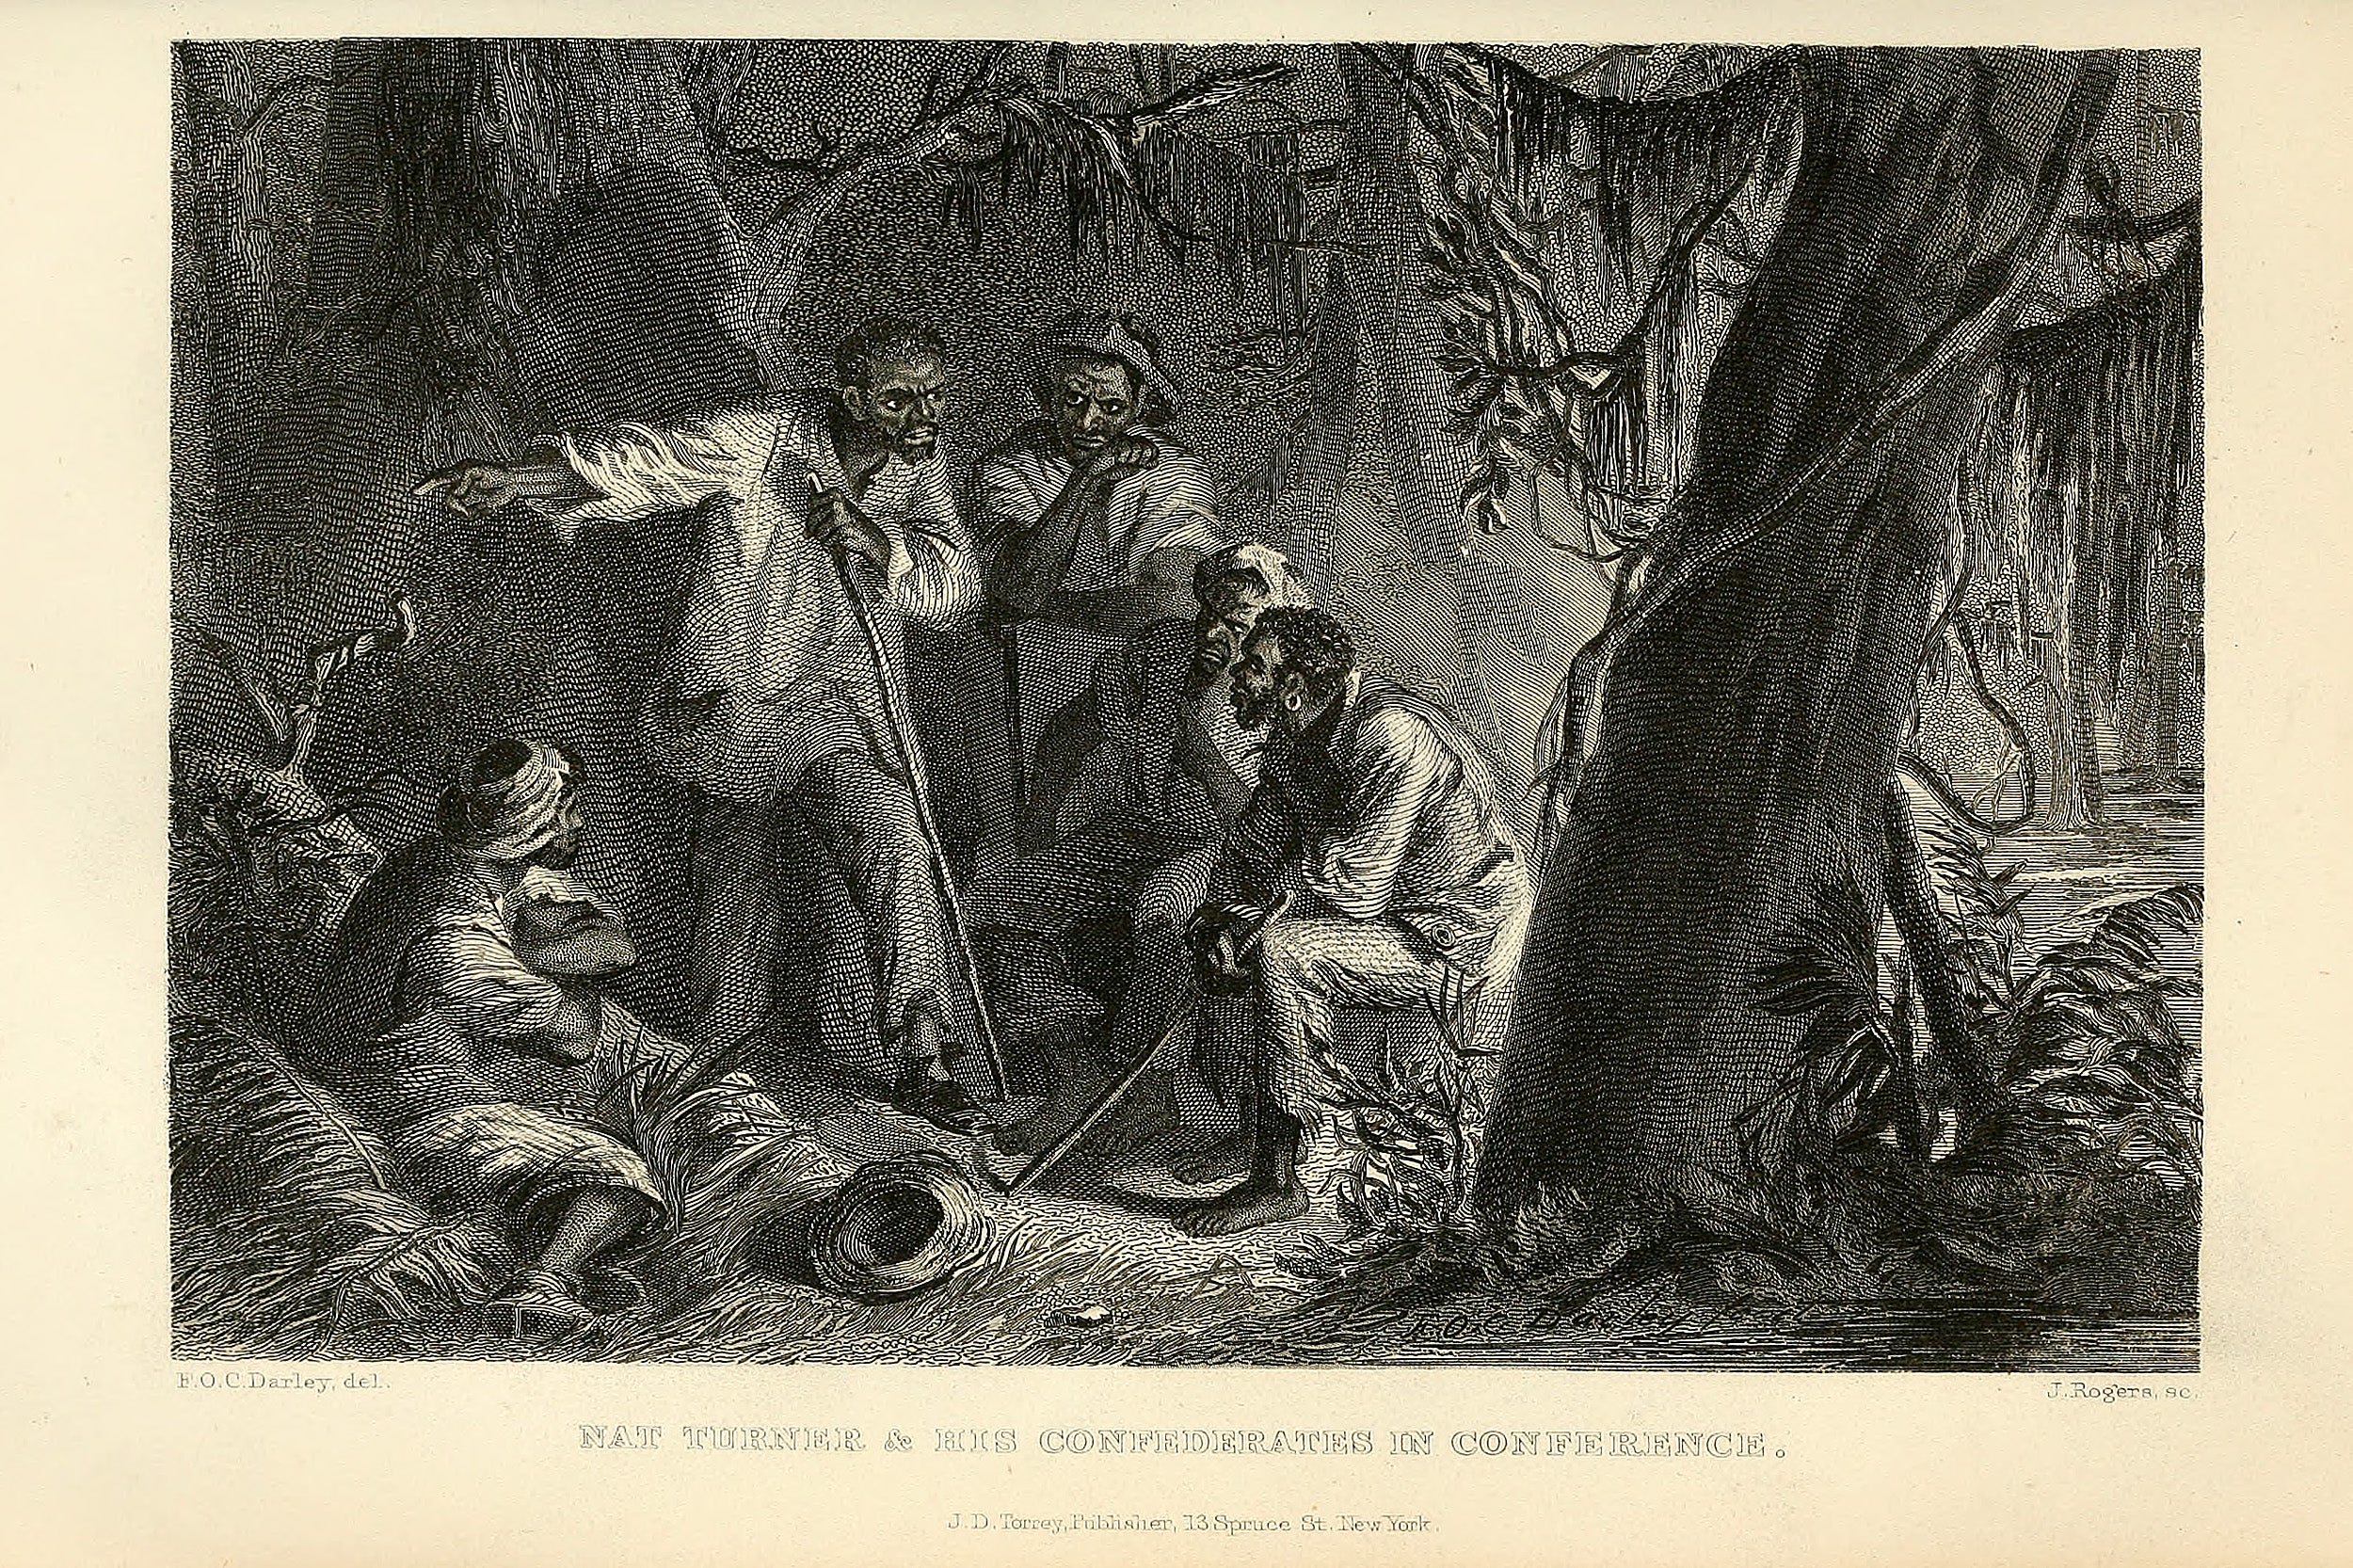 Illustration of Nat Turner's rebellion.